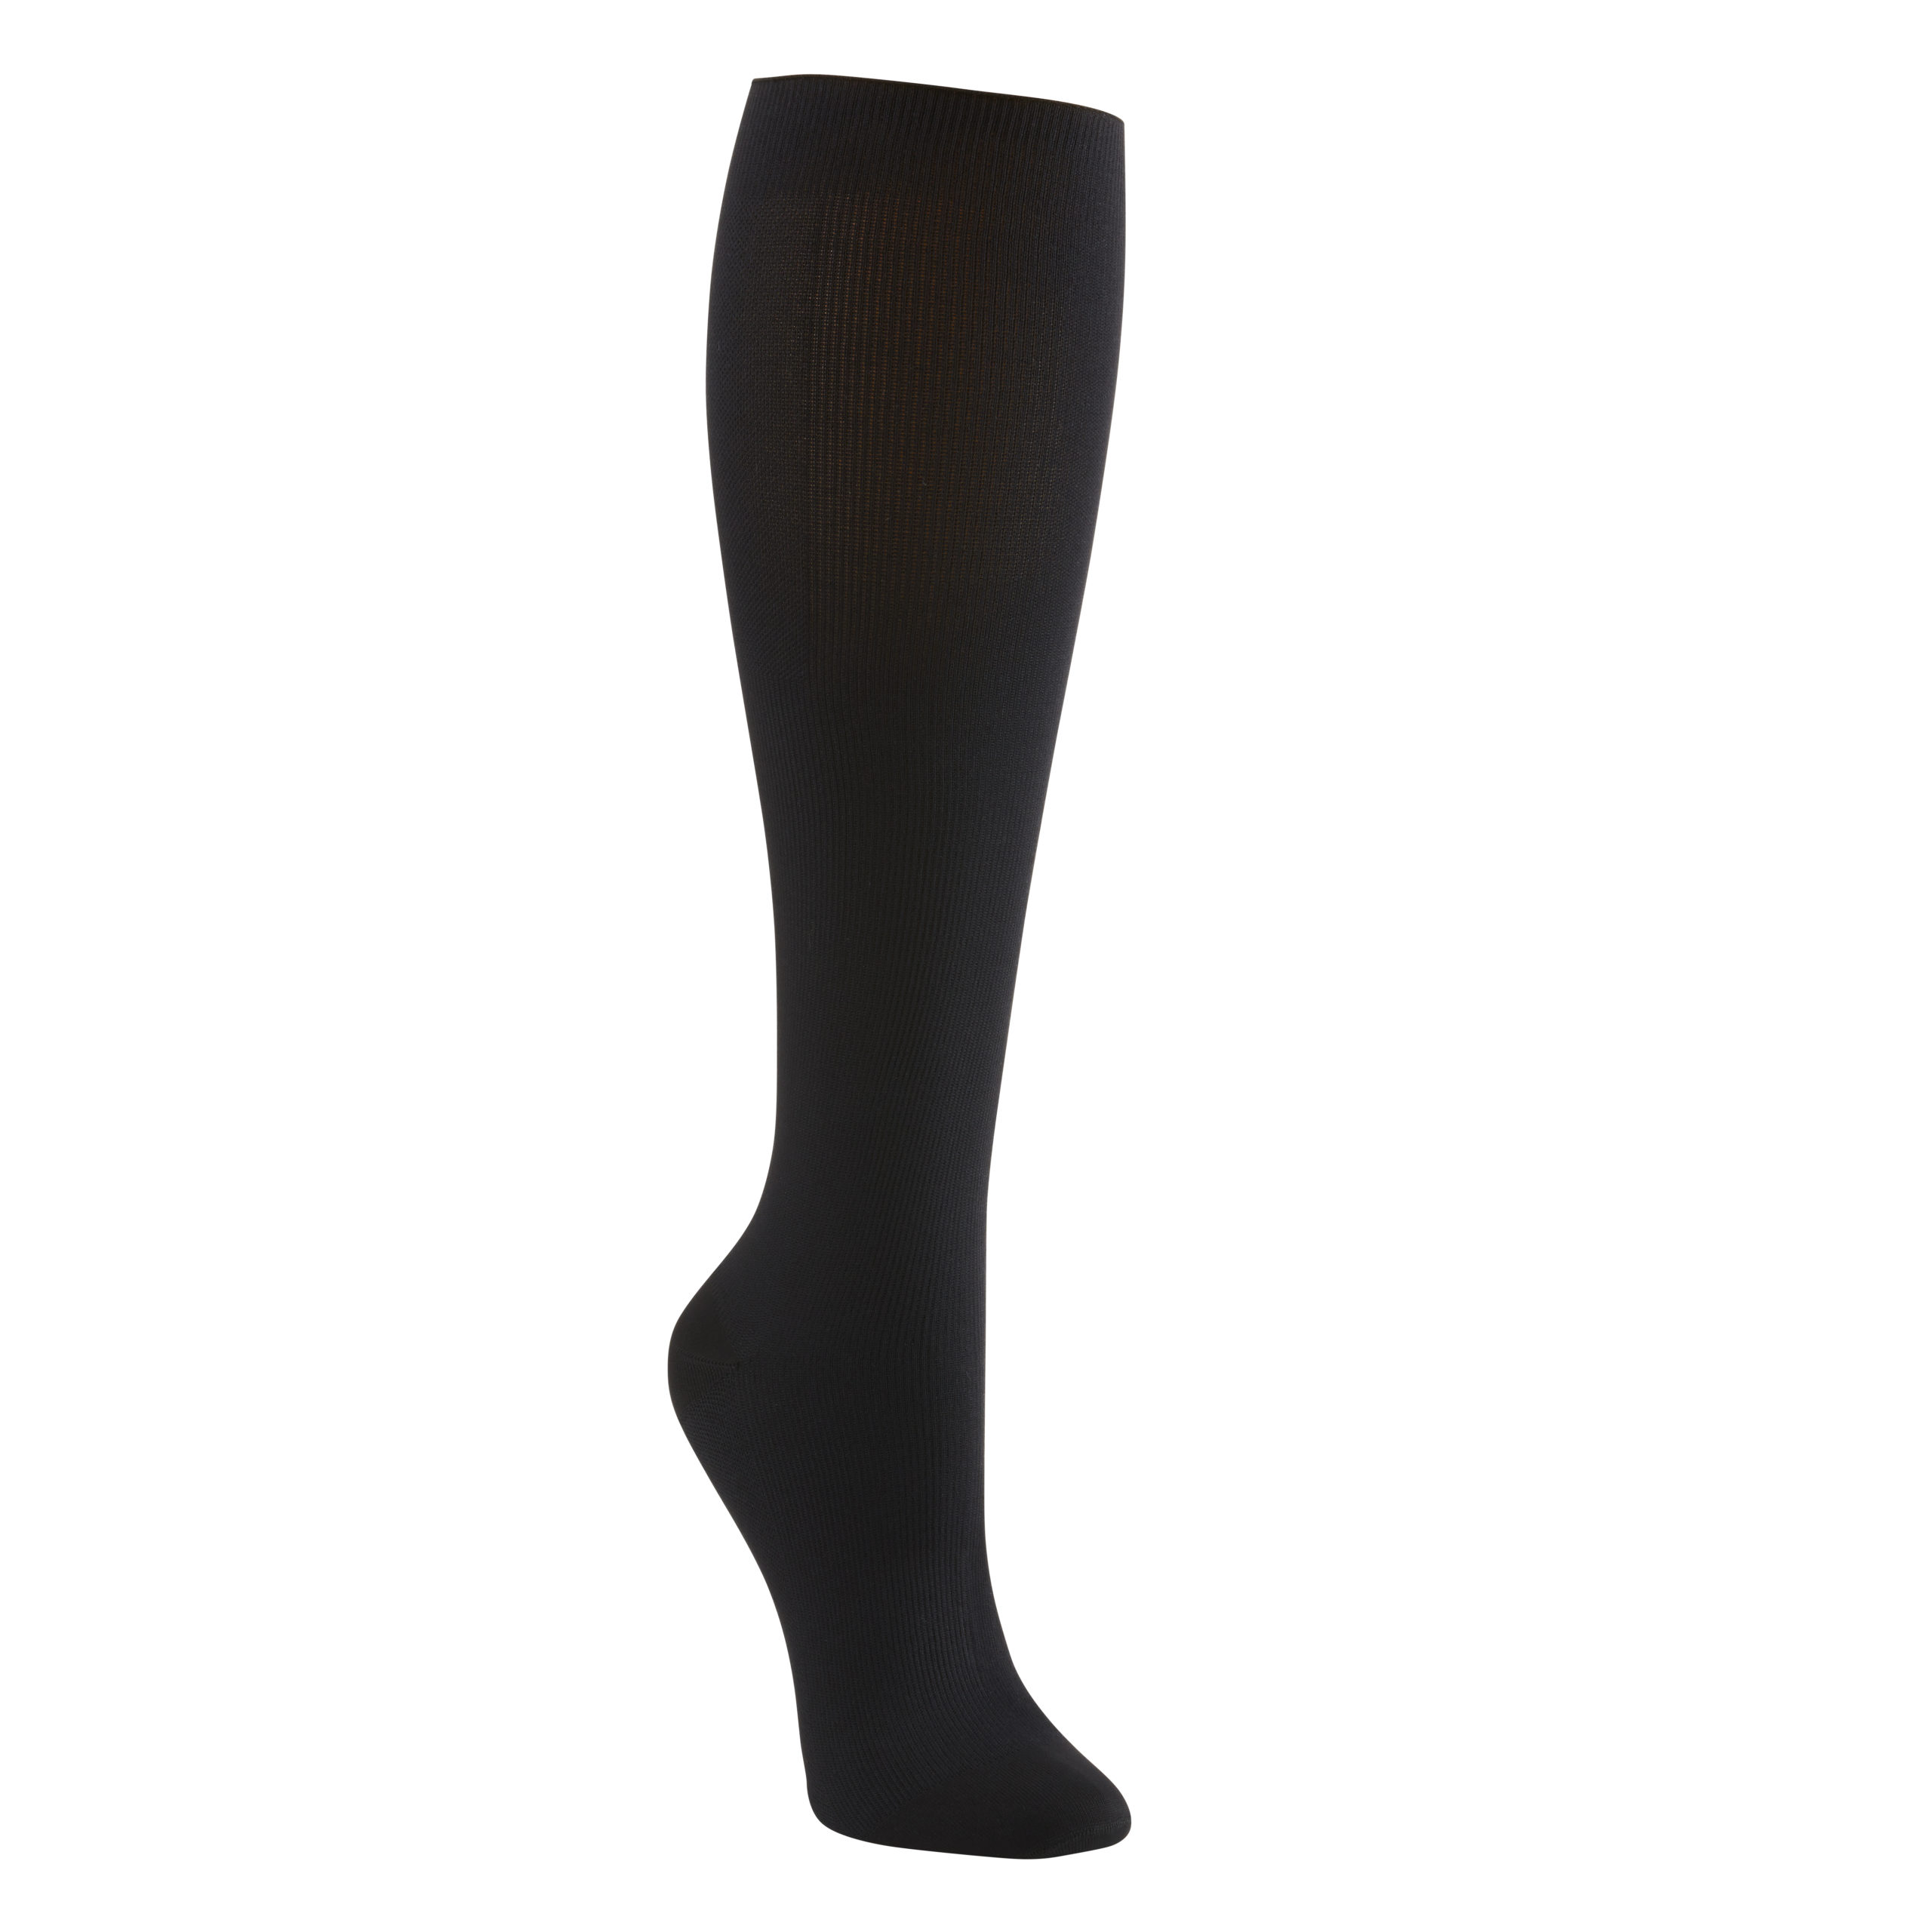 Cotton Knee-high Compression Socks, 10-15 mmHg